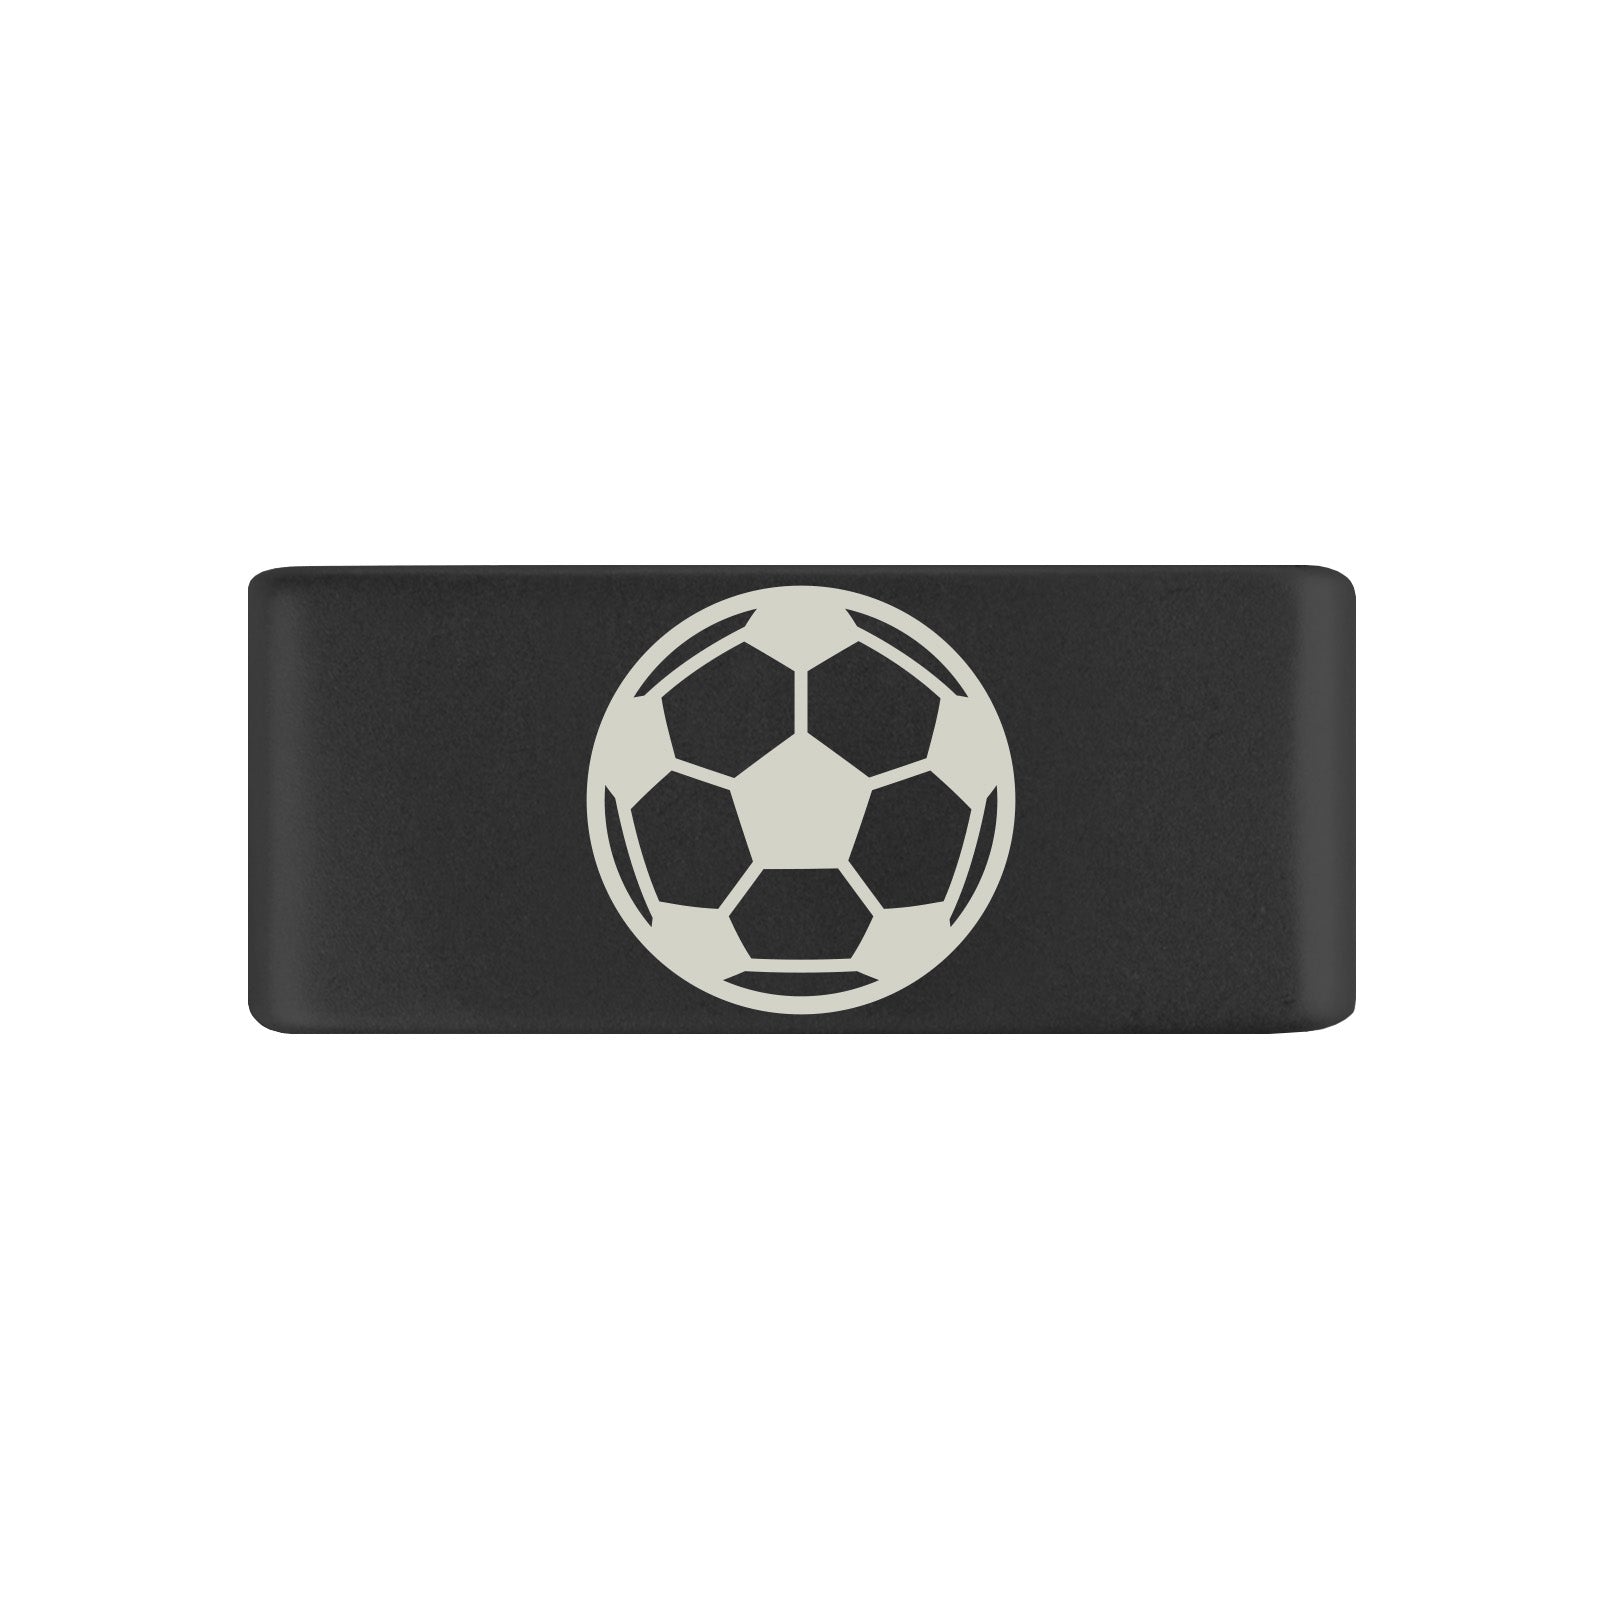 Soccer Badge Badge 13mm - ROAD iD